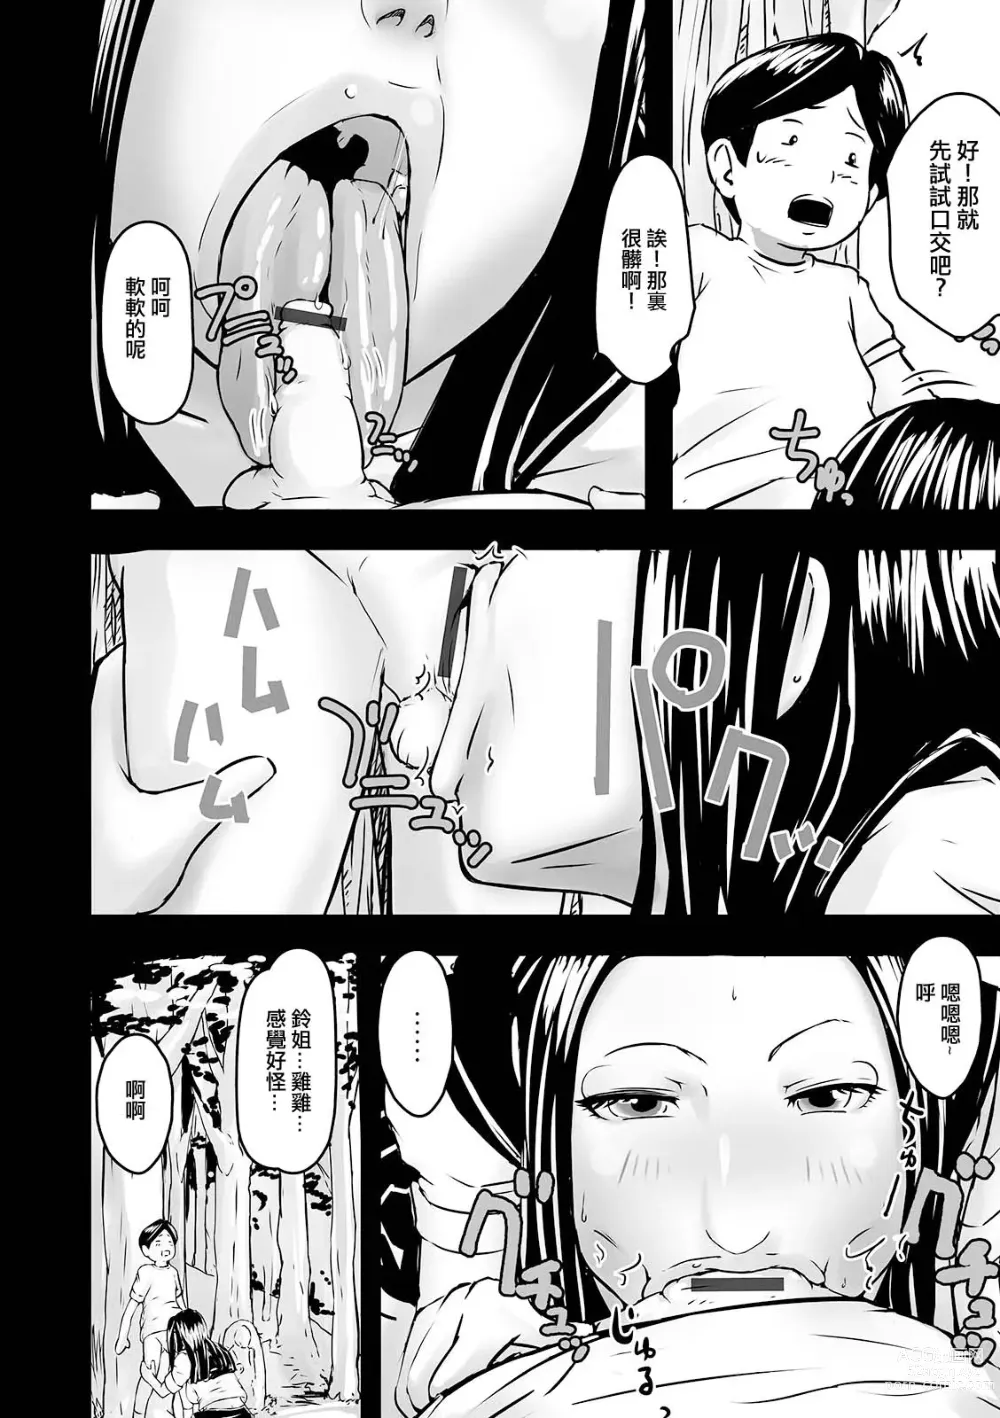 Page 4 of manga 昔散々弄られたお姉ちゃんが人妻になって帰って来た件